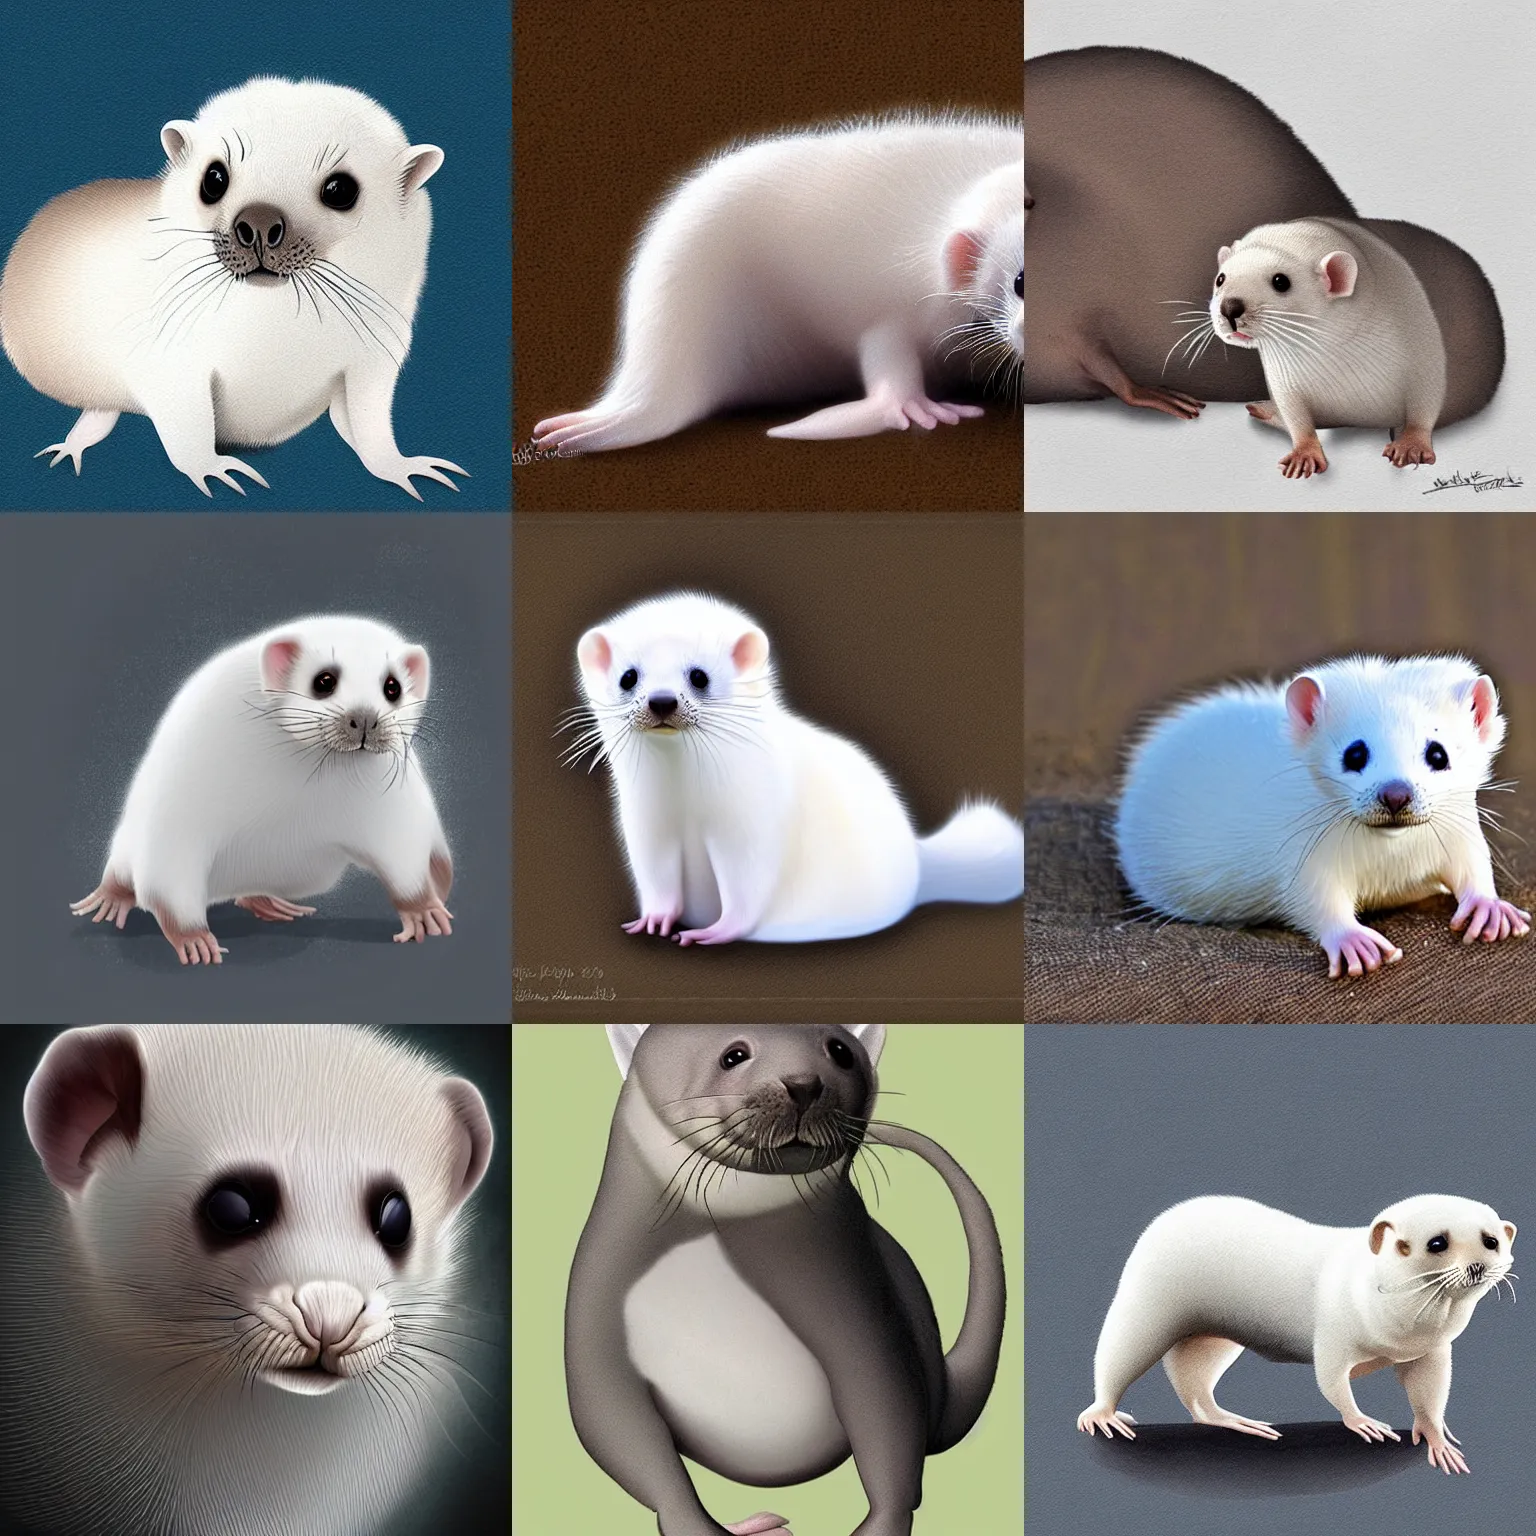 Prompt: seal ferret chimera, white fur, adorable, award-winning digital art